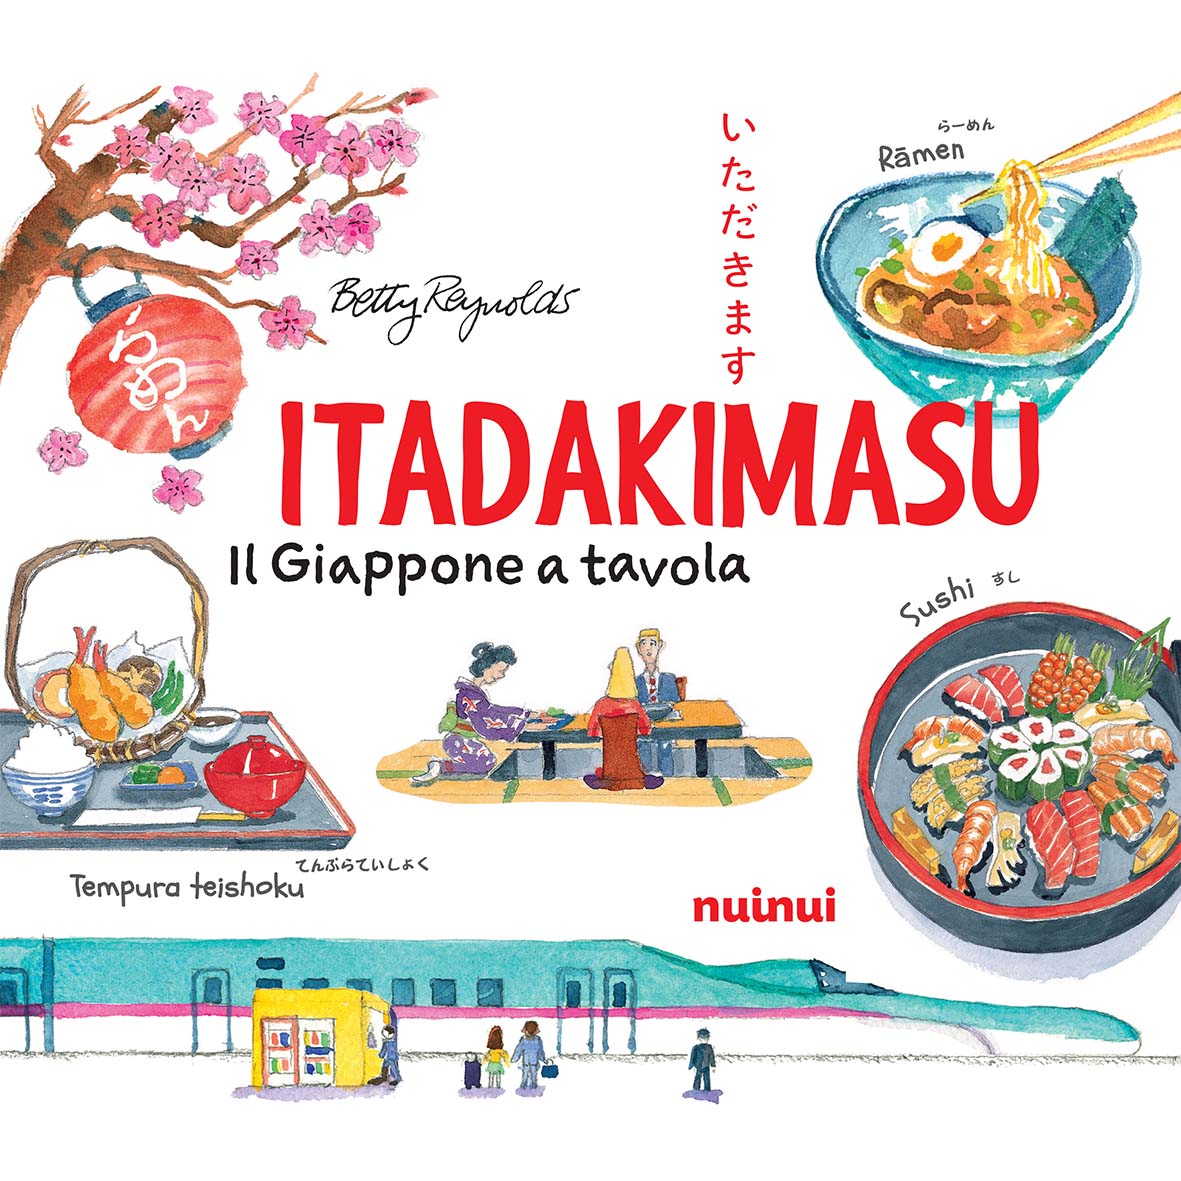 Itadakimasu - Il Giappone a tavola